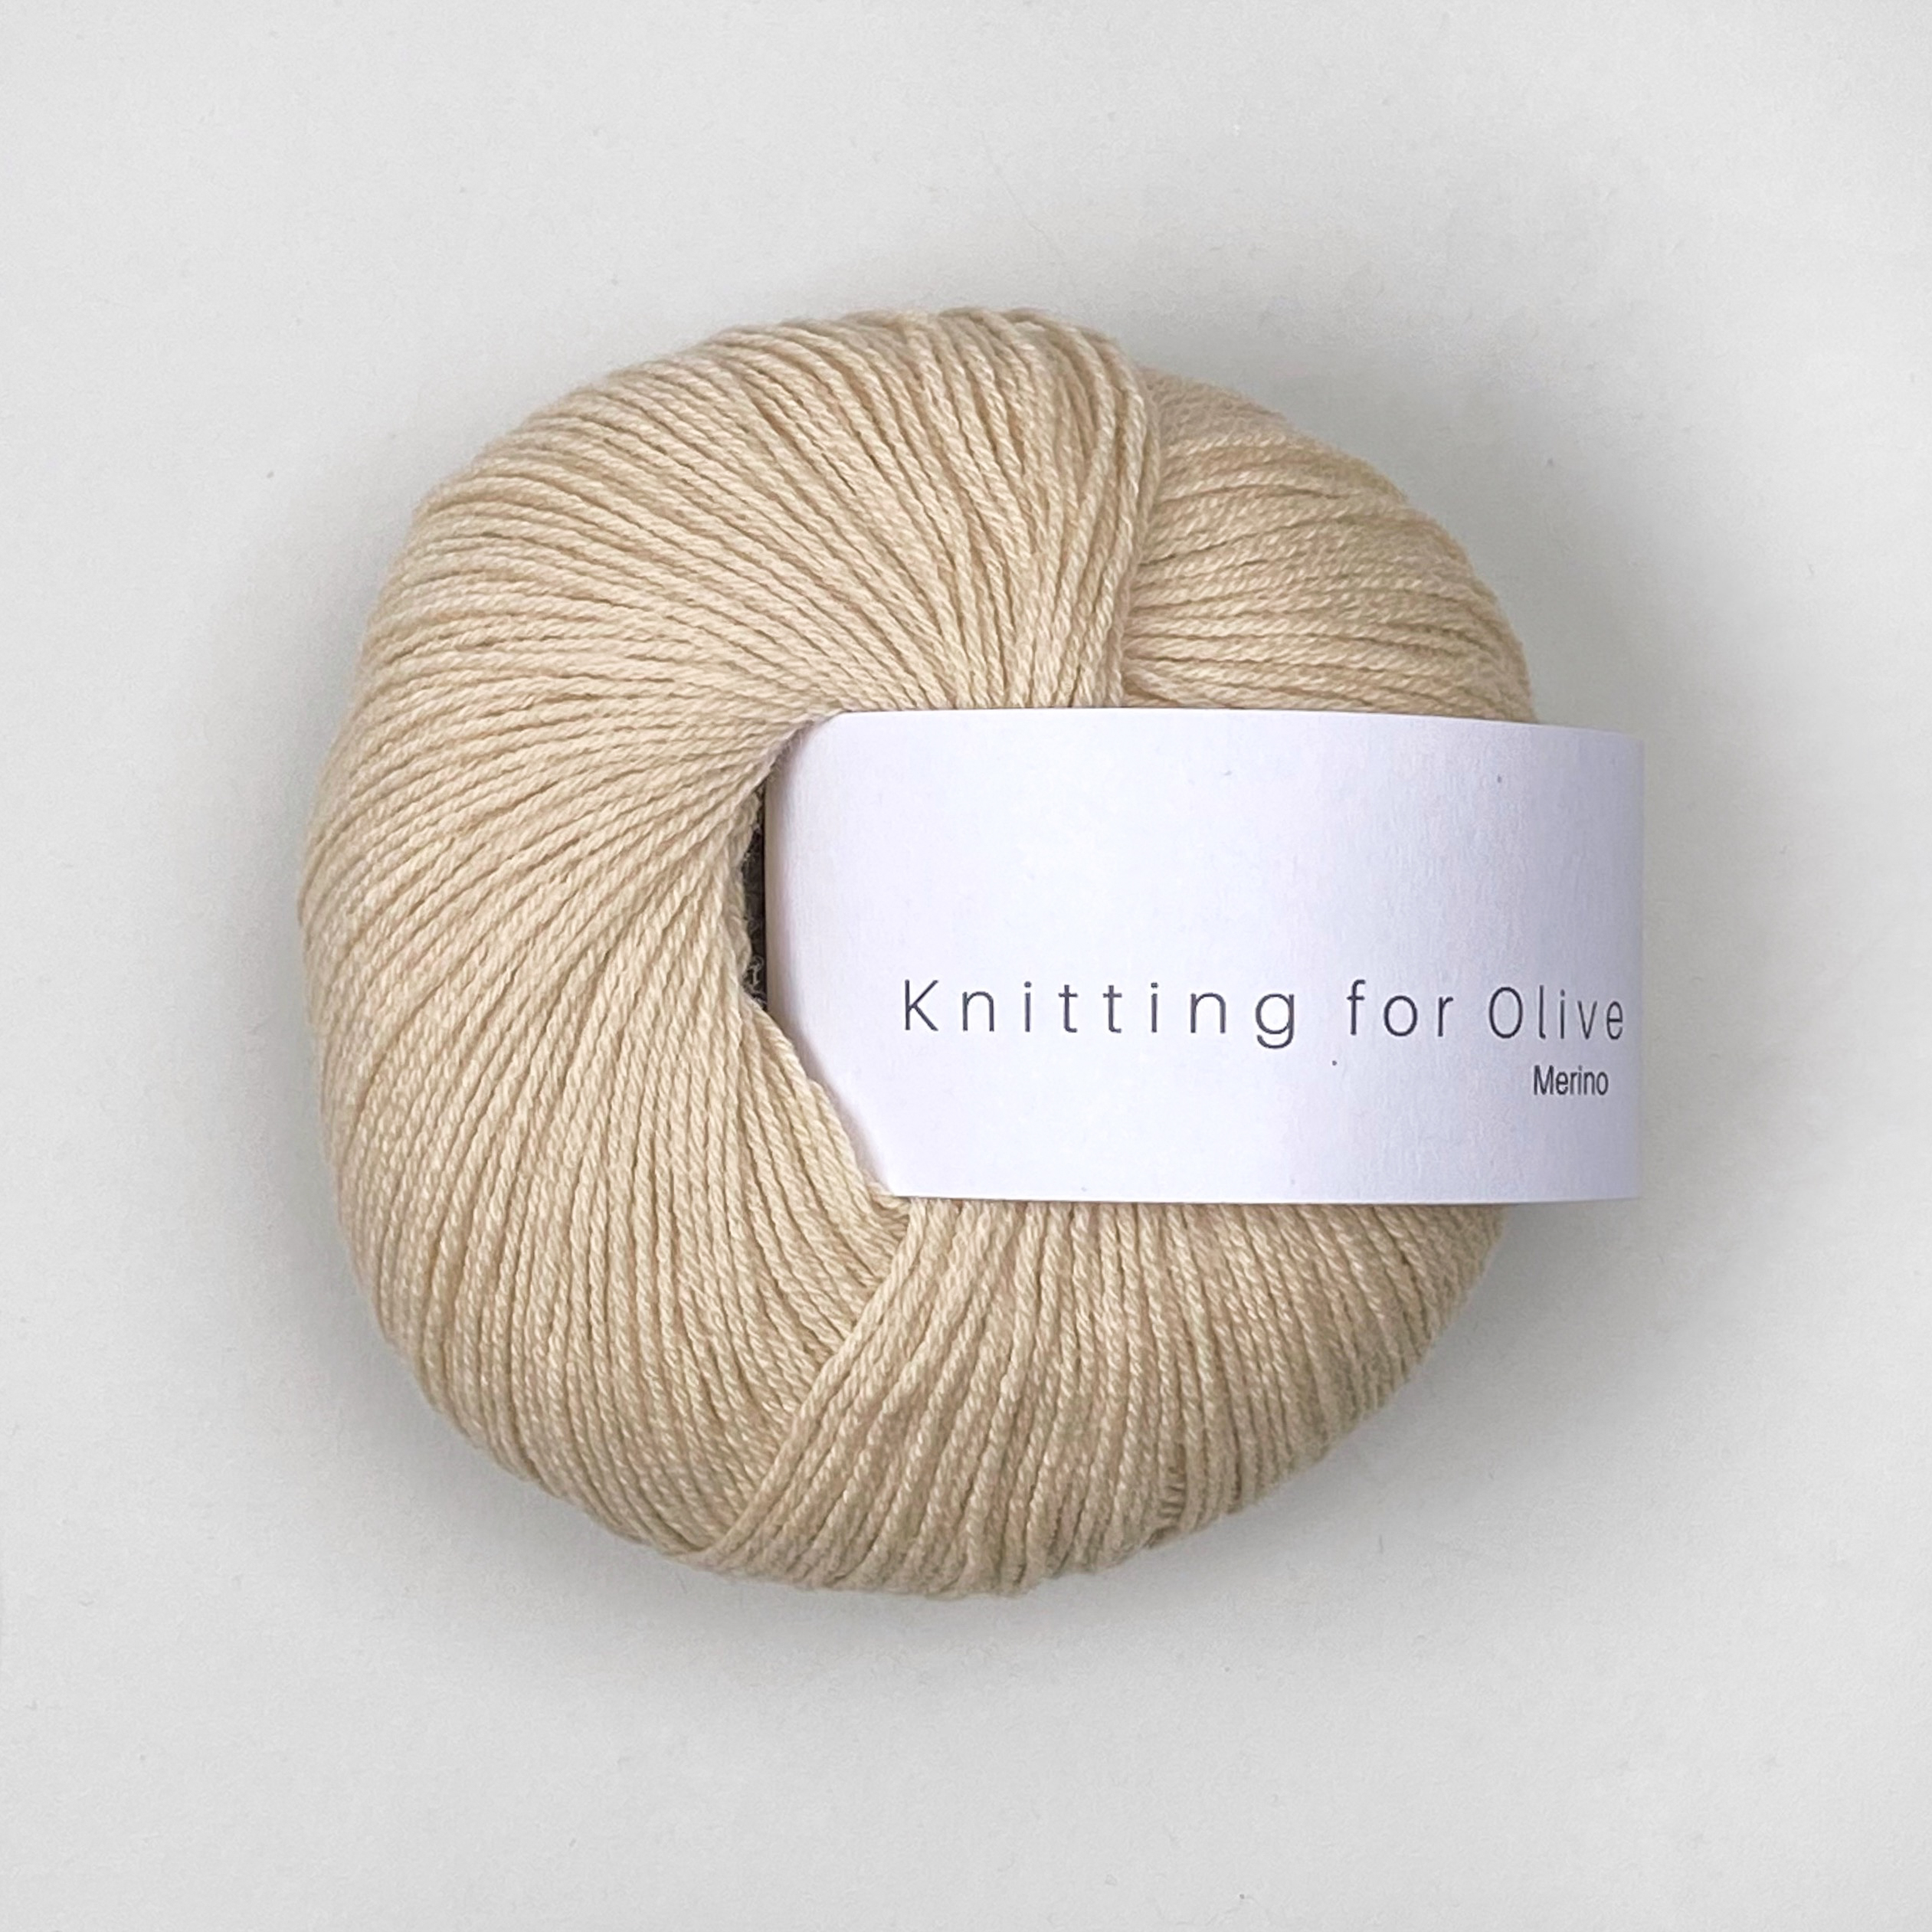 Merino (Knitting for Olive): wheat